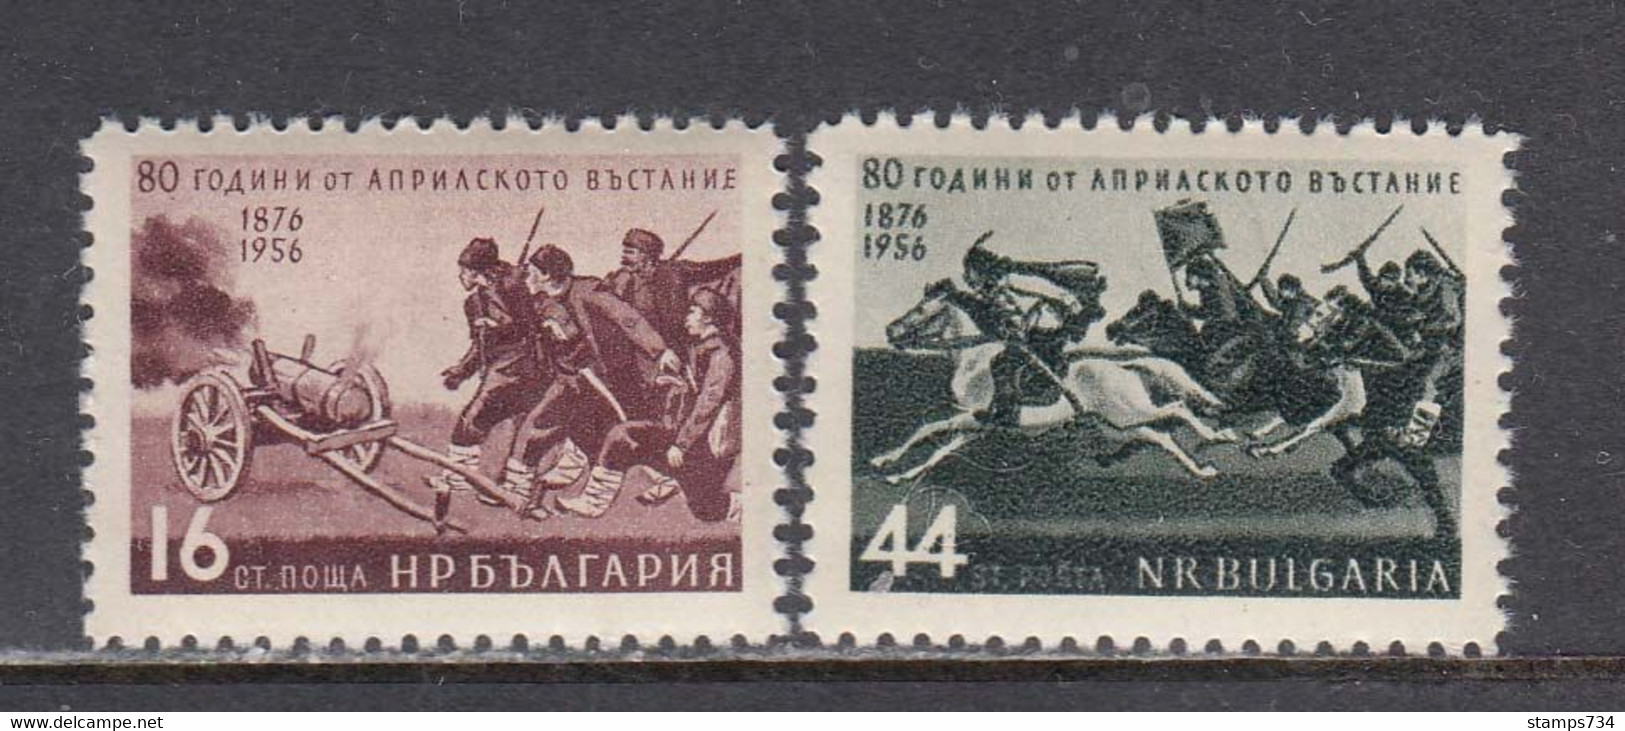 Bulgaria 1956 - 80th Anniversary Of The April Uprising Against The Turks, Mi-Nr. 986/87, MNH** - Nuevos